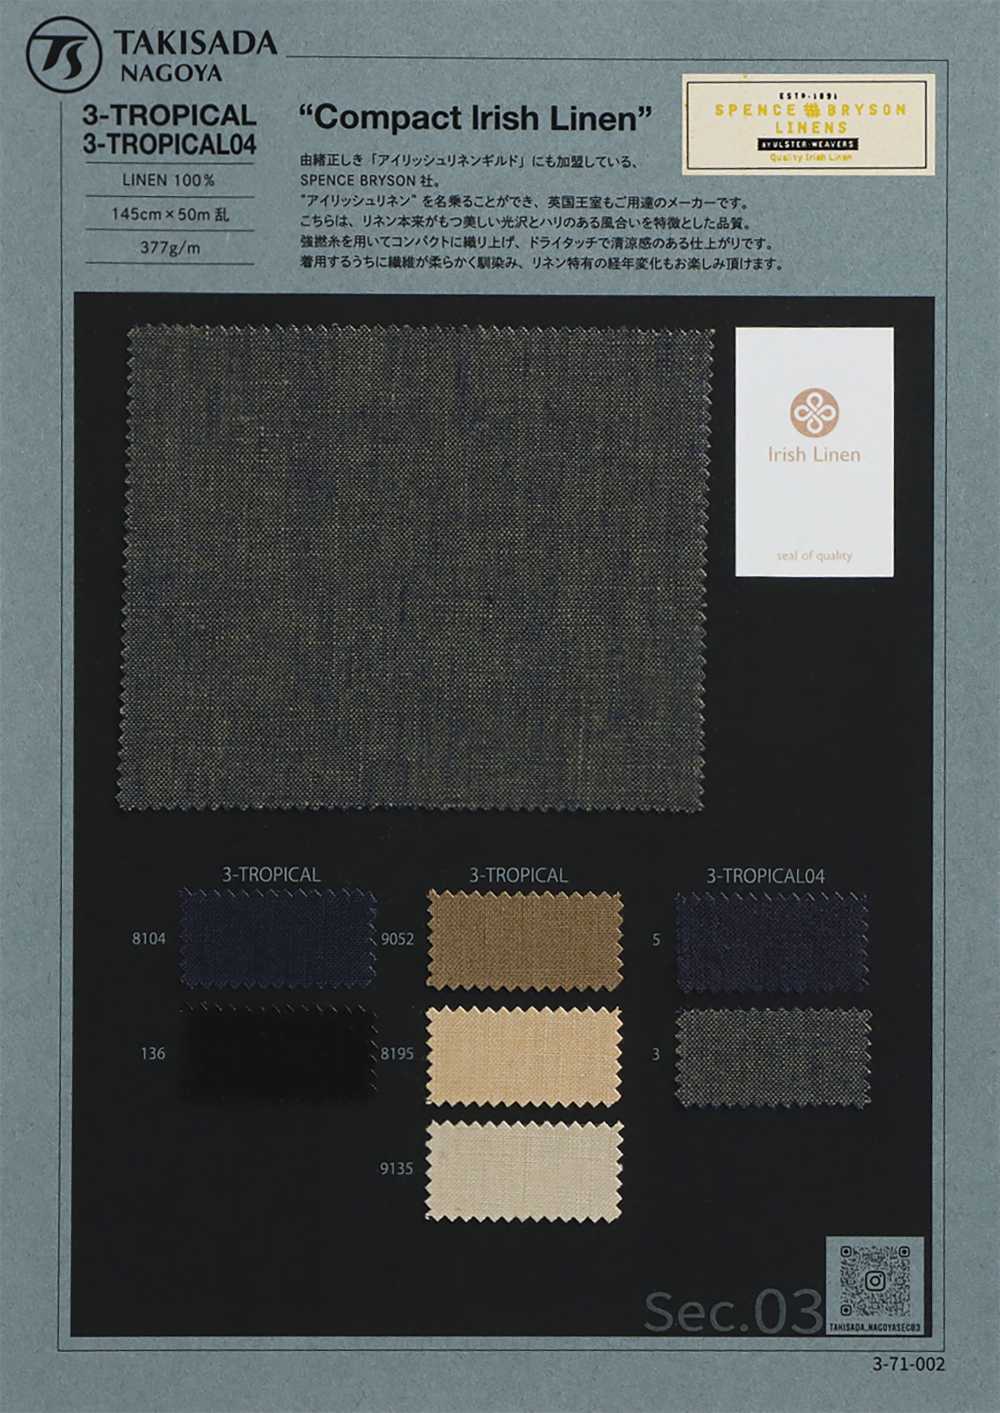 3-TROPICAL SPENCE BRYSON COMPACT IRISH LINEN IRISH LINEN Irish Linen Linen Tropical Strong Twisted Yarn Compact[Textile / Fabric] Takisada Nagoya